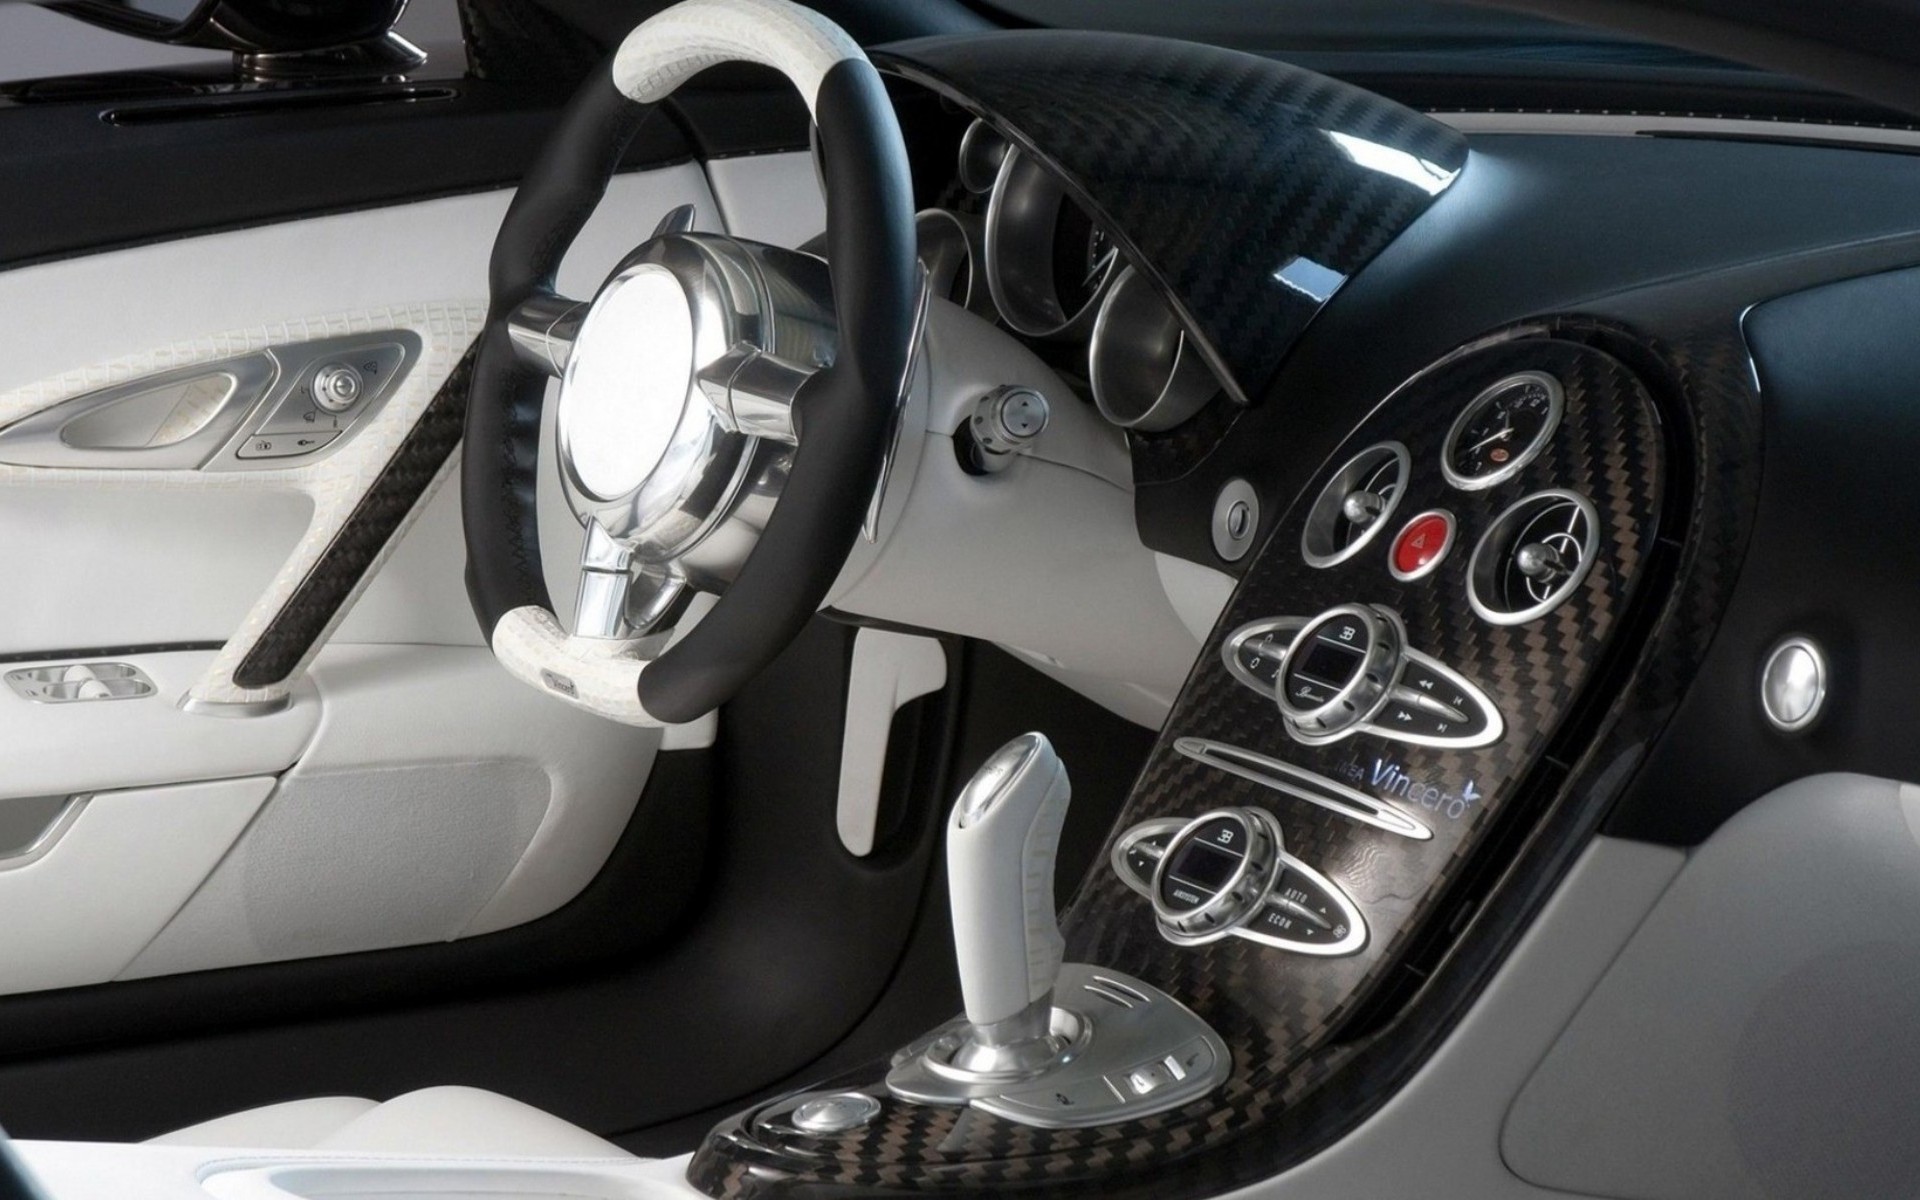 342289 descargar imagen vehículos, bugatti veyron 16 4 gran deporte, bugatti: fondos de pantalla y protectores de pantalla gratis